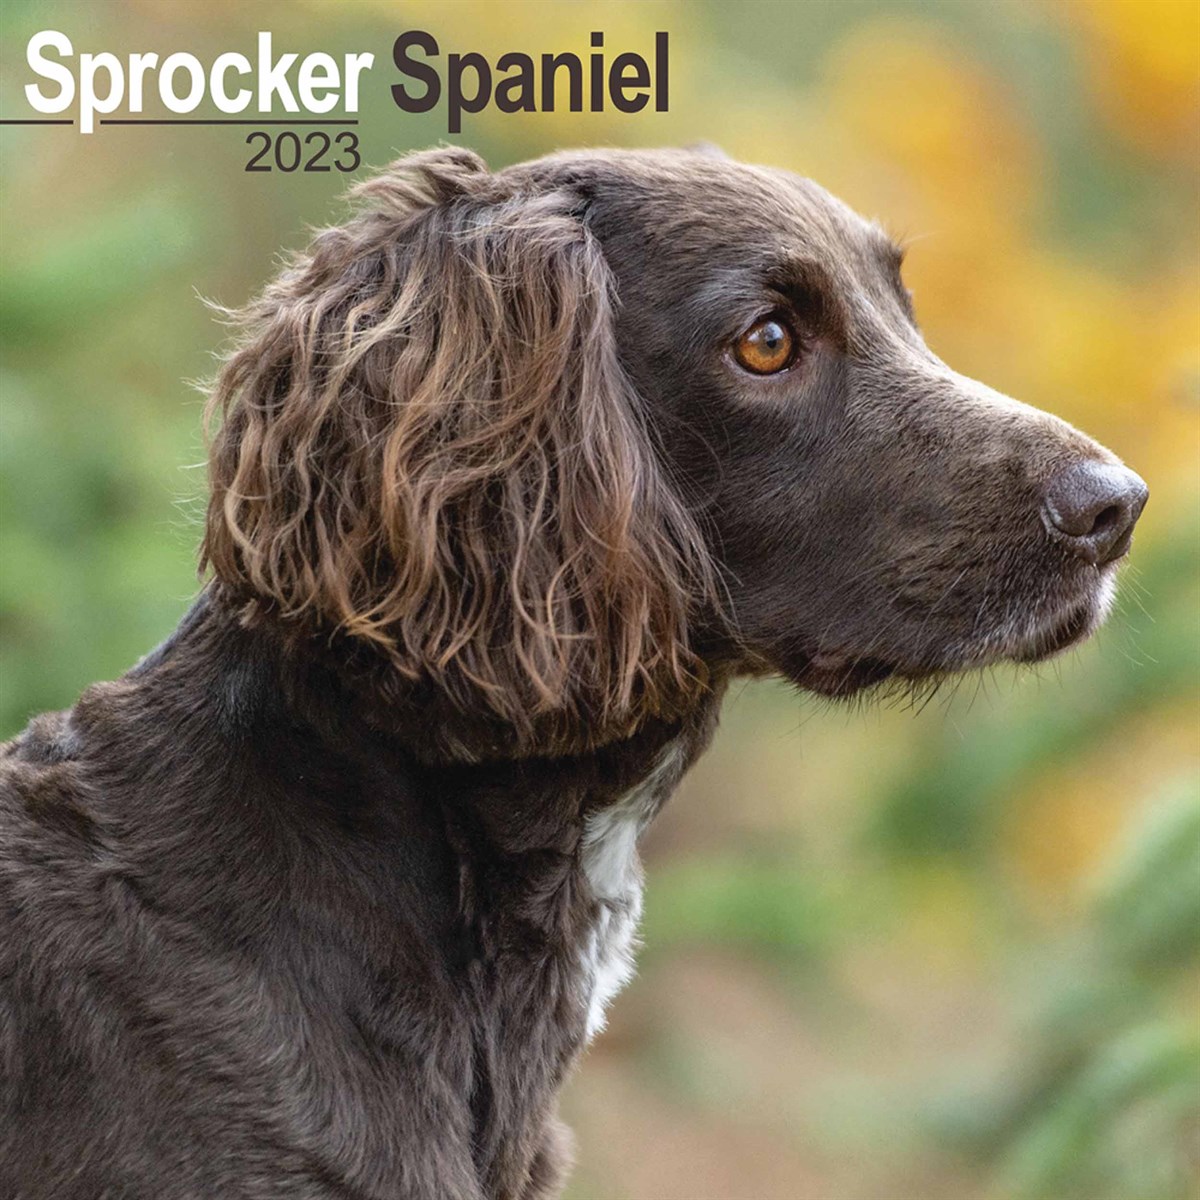 Sprocker Spaniel 2023 Calendars